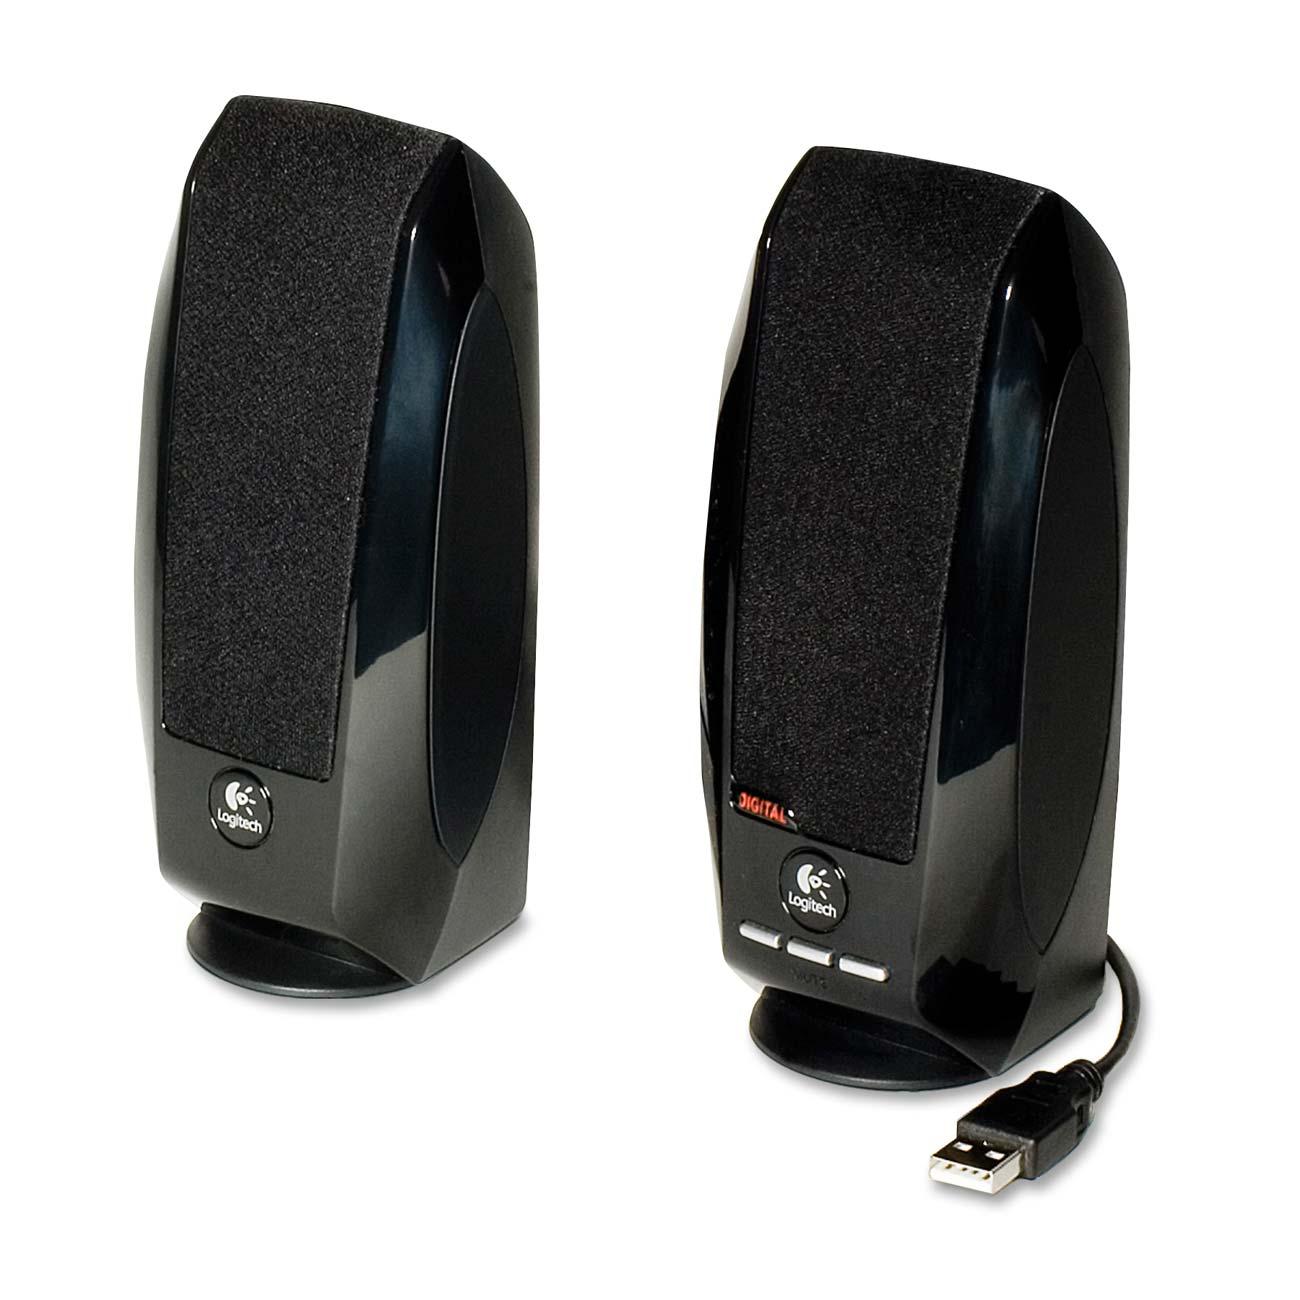 Logitech S-150 2.0 Speaker System - 1.20 W RMS - Black - image 1 of 2